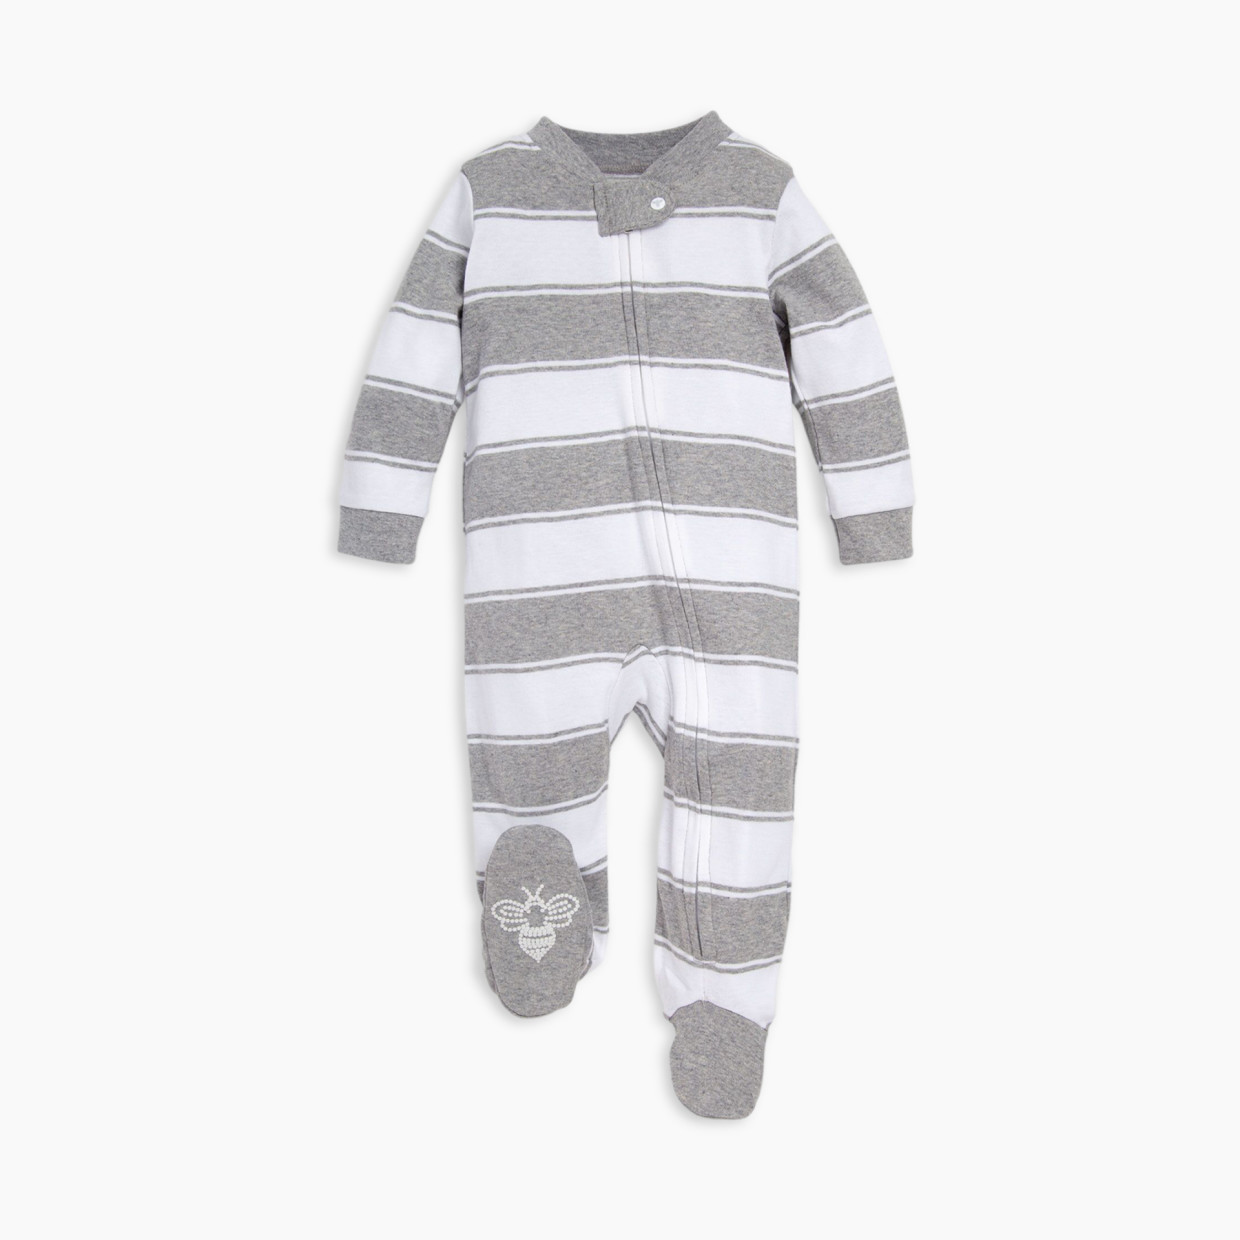 Burt's Bees Baby Organic Sleep & Play Footie Pajamas - Heather Grey Rugby Peace Stripe, 0-3 Months.